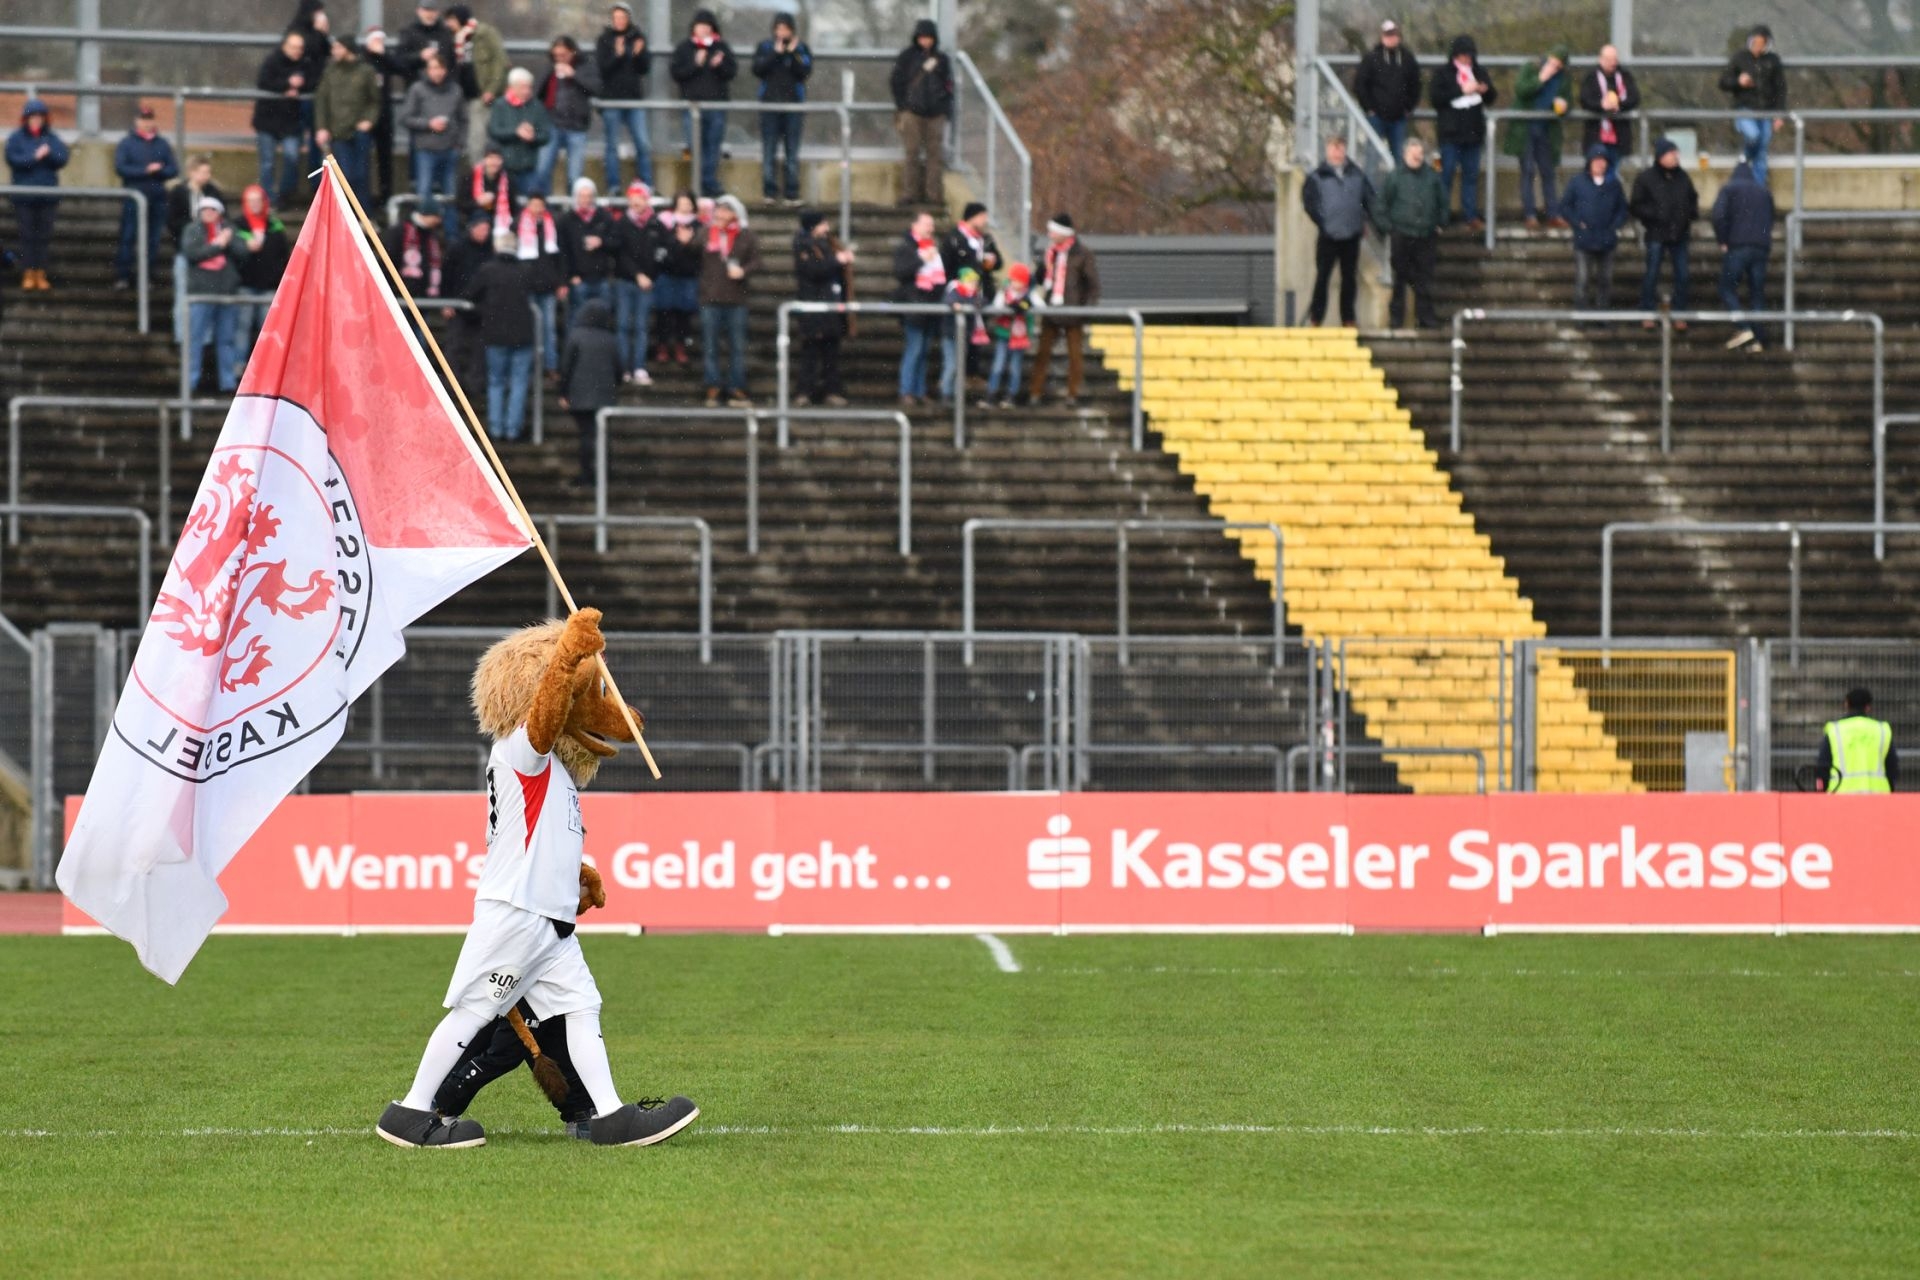 Lotto Hessenliga 2019/2020, KSV Hessen Kassel, FV Bad Vilbel, Endstand 6:1